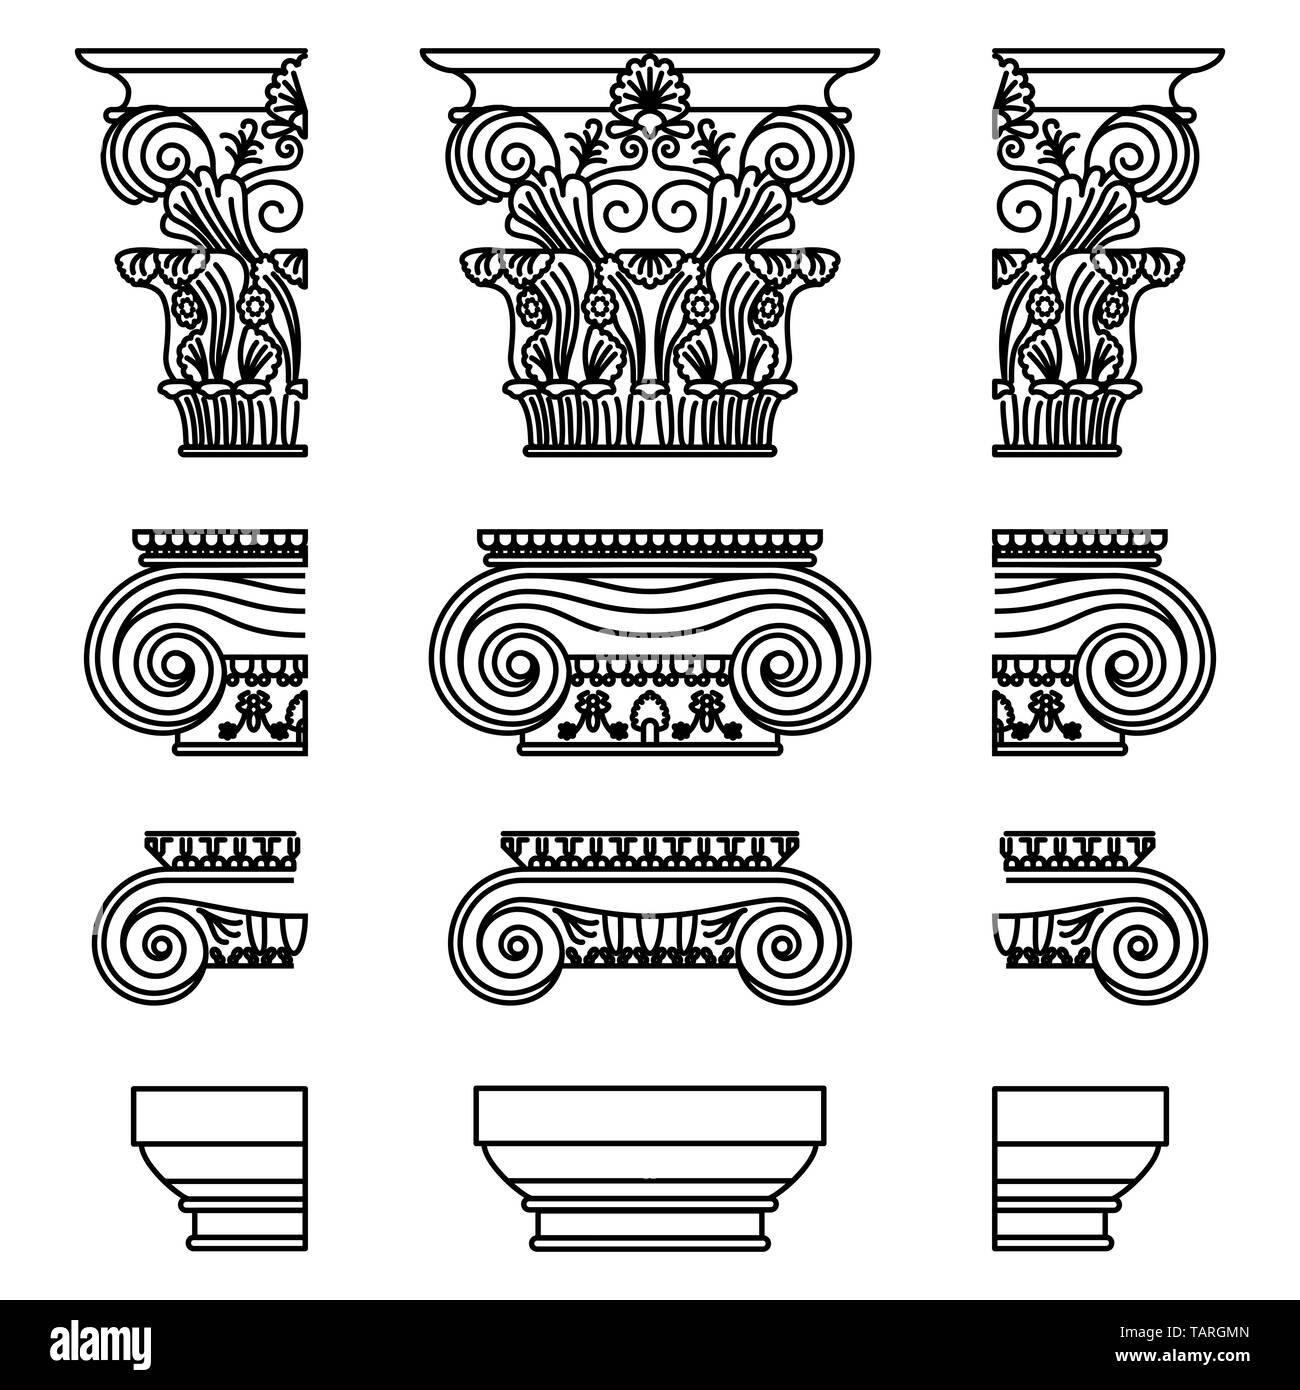 A set of antique Greek historical capitals for Calon: Ionic, Doric, and Corinthian capitals with a cut element scheme Stock Vector